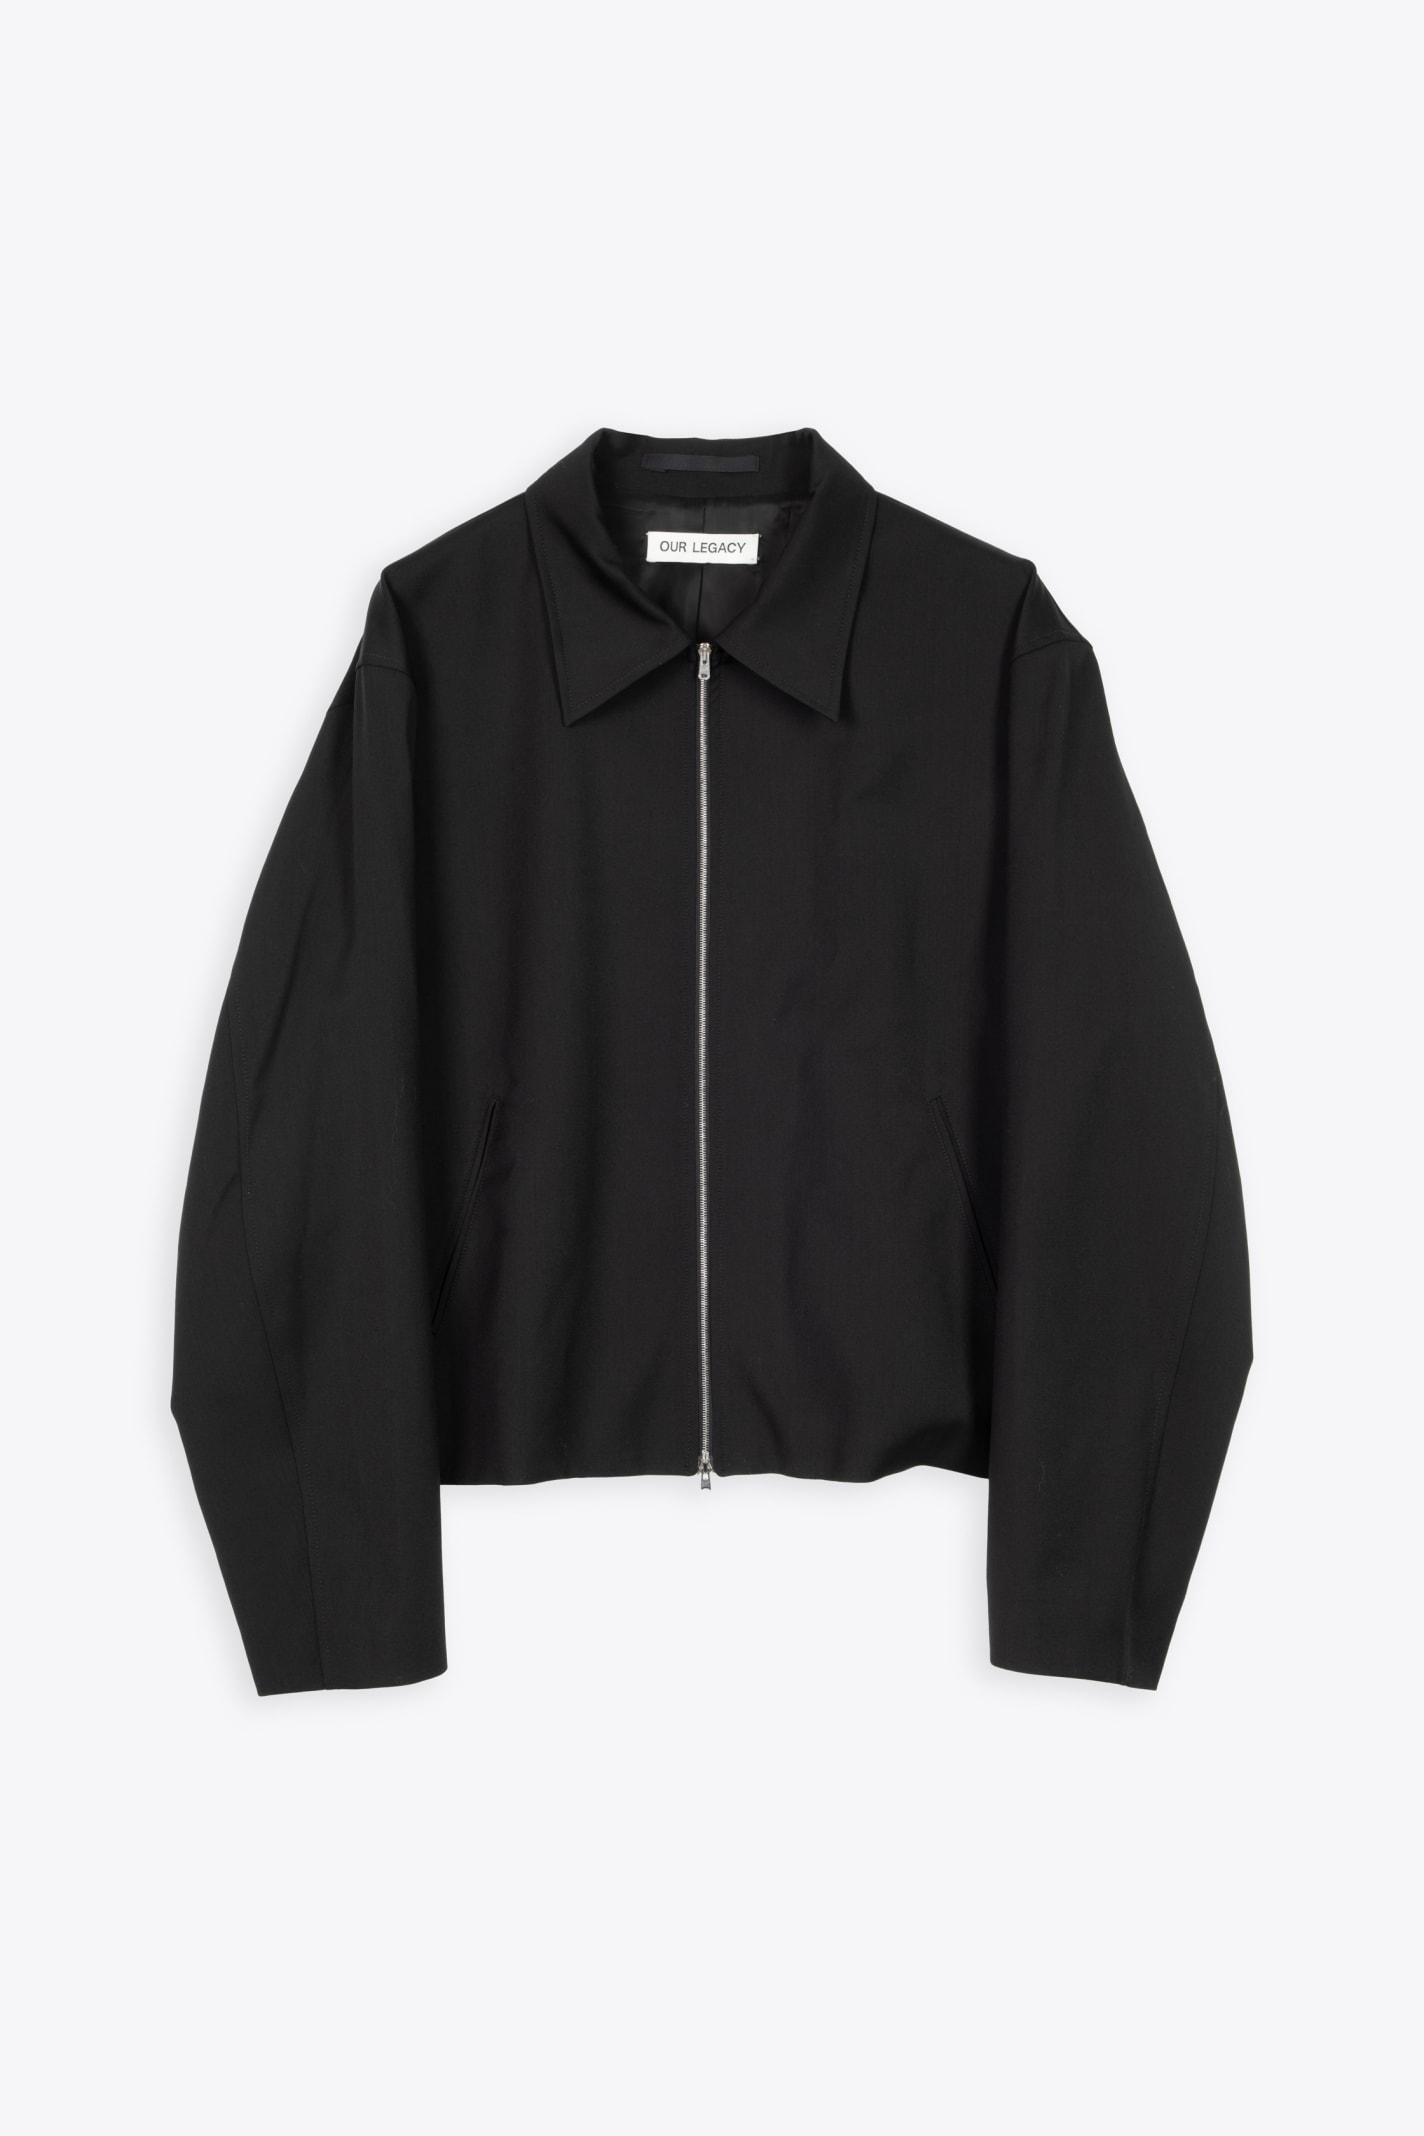 Mini Jacket Black wool tailored boxy jacket - Mini Jacket